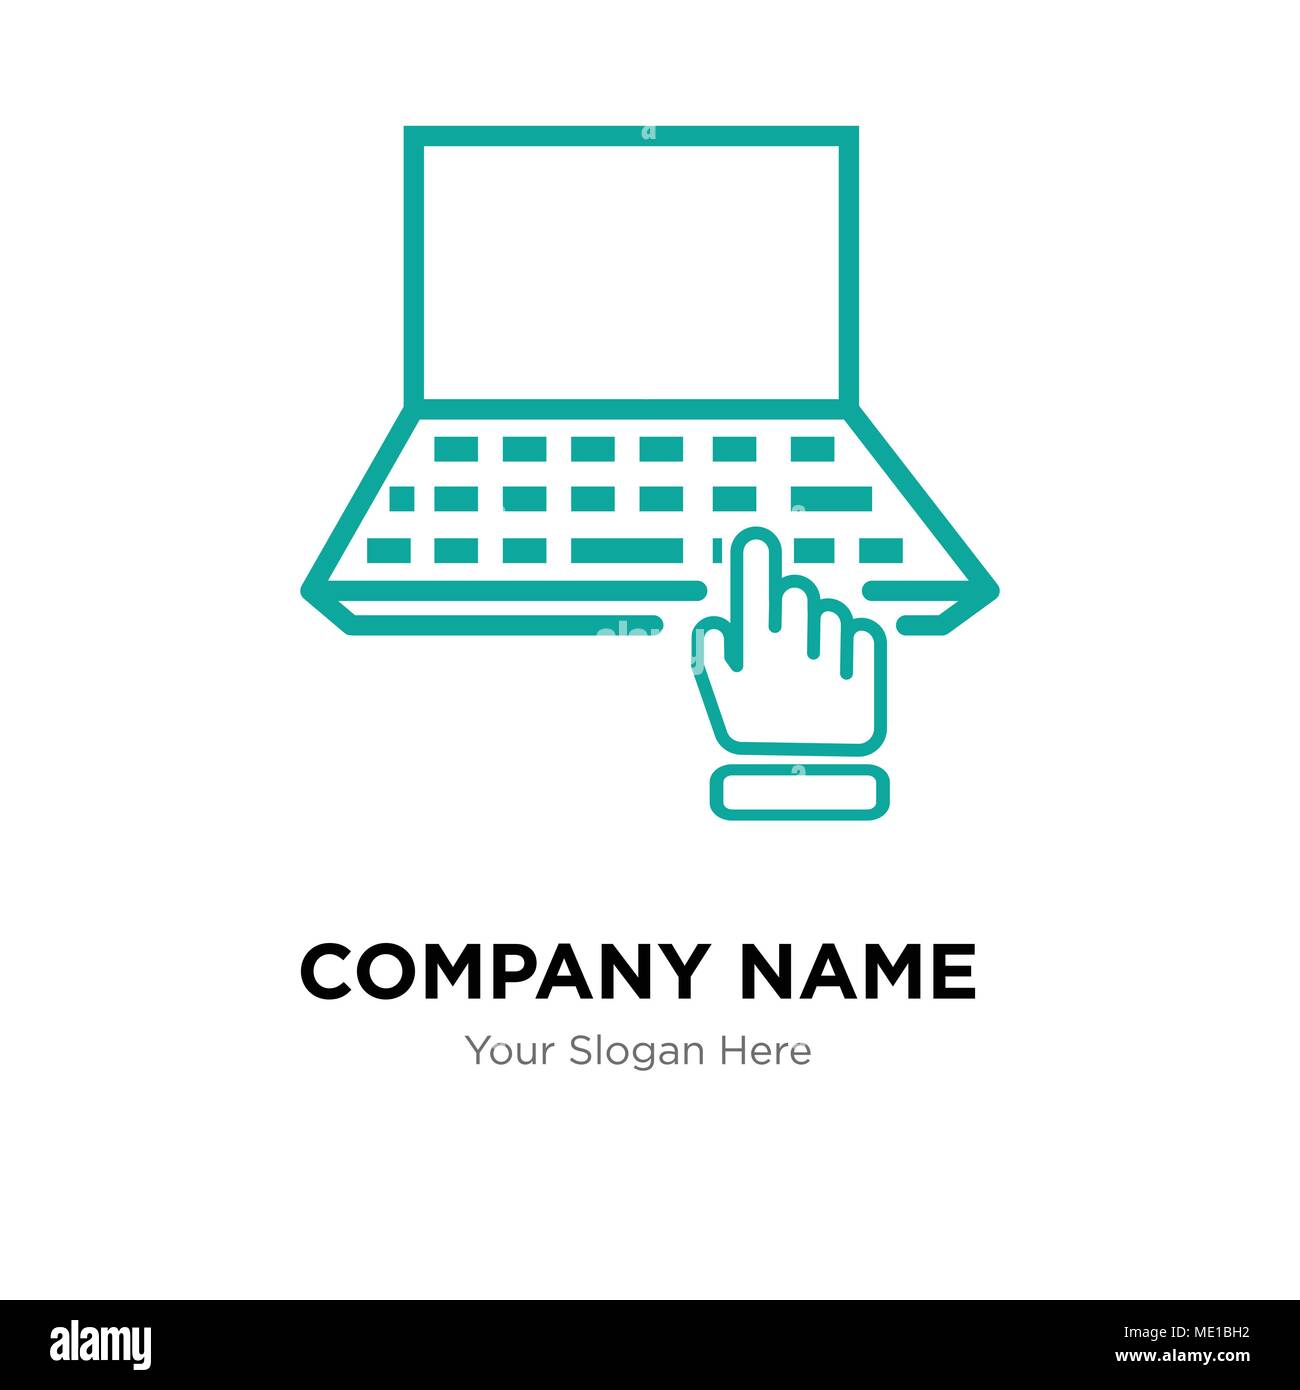 Computer Company Logo Design Template Business Corporate Vector